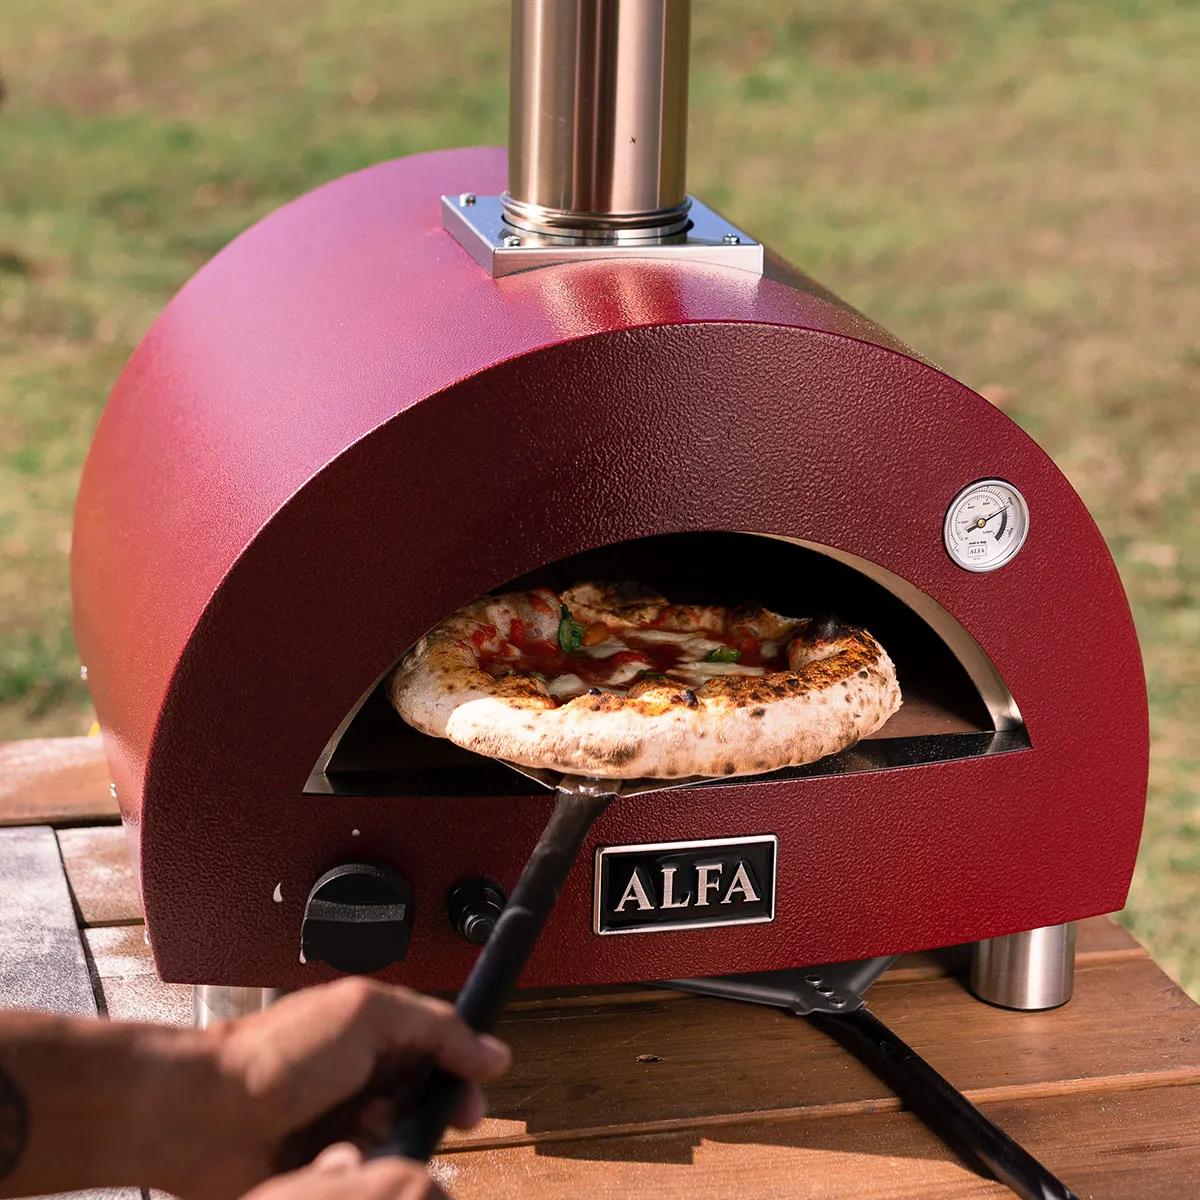 alfa forni pizza ovens - Dónde se fabrican los hornos Alfa